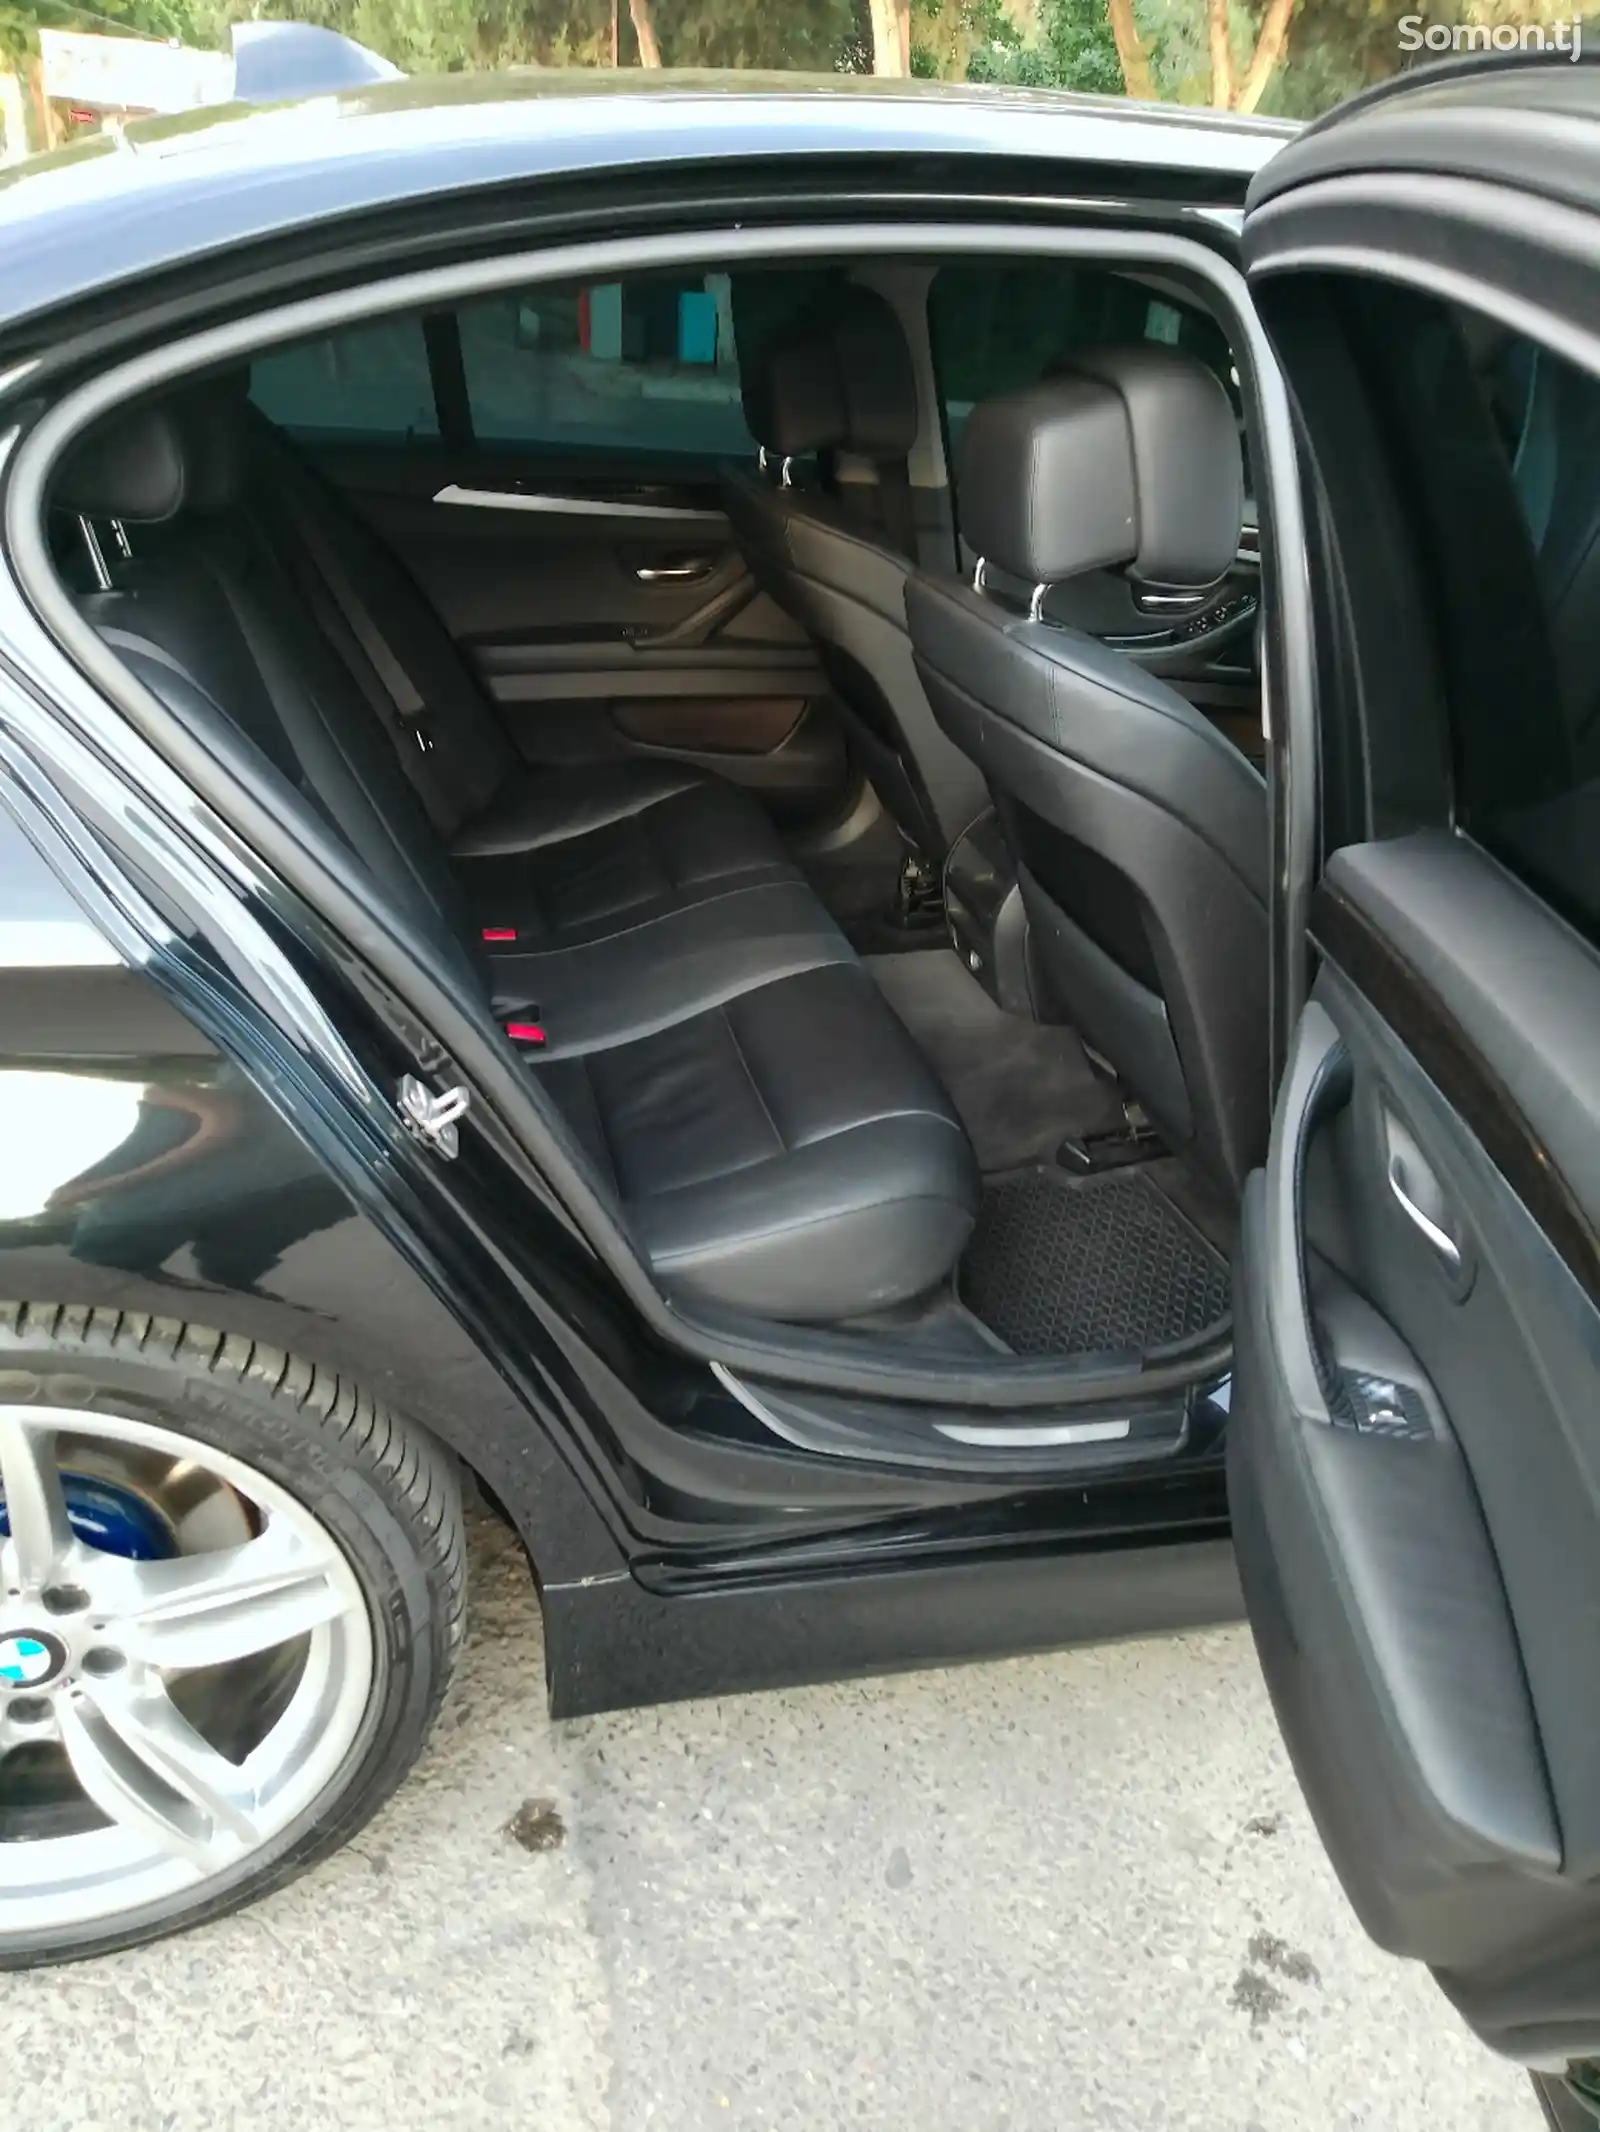 BMW 5 series, 2011-13